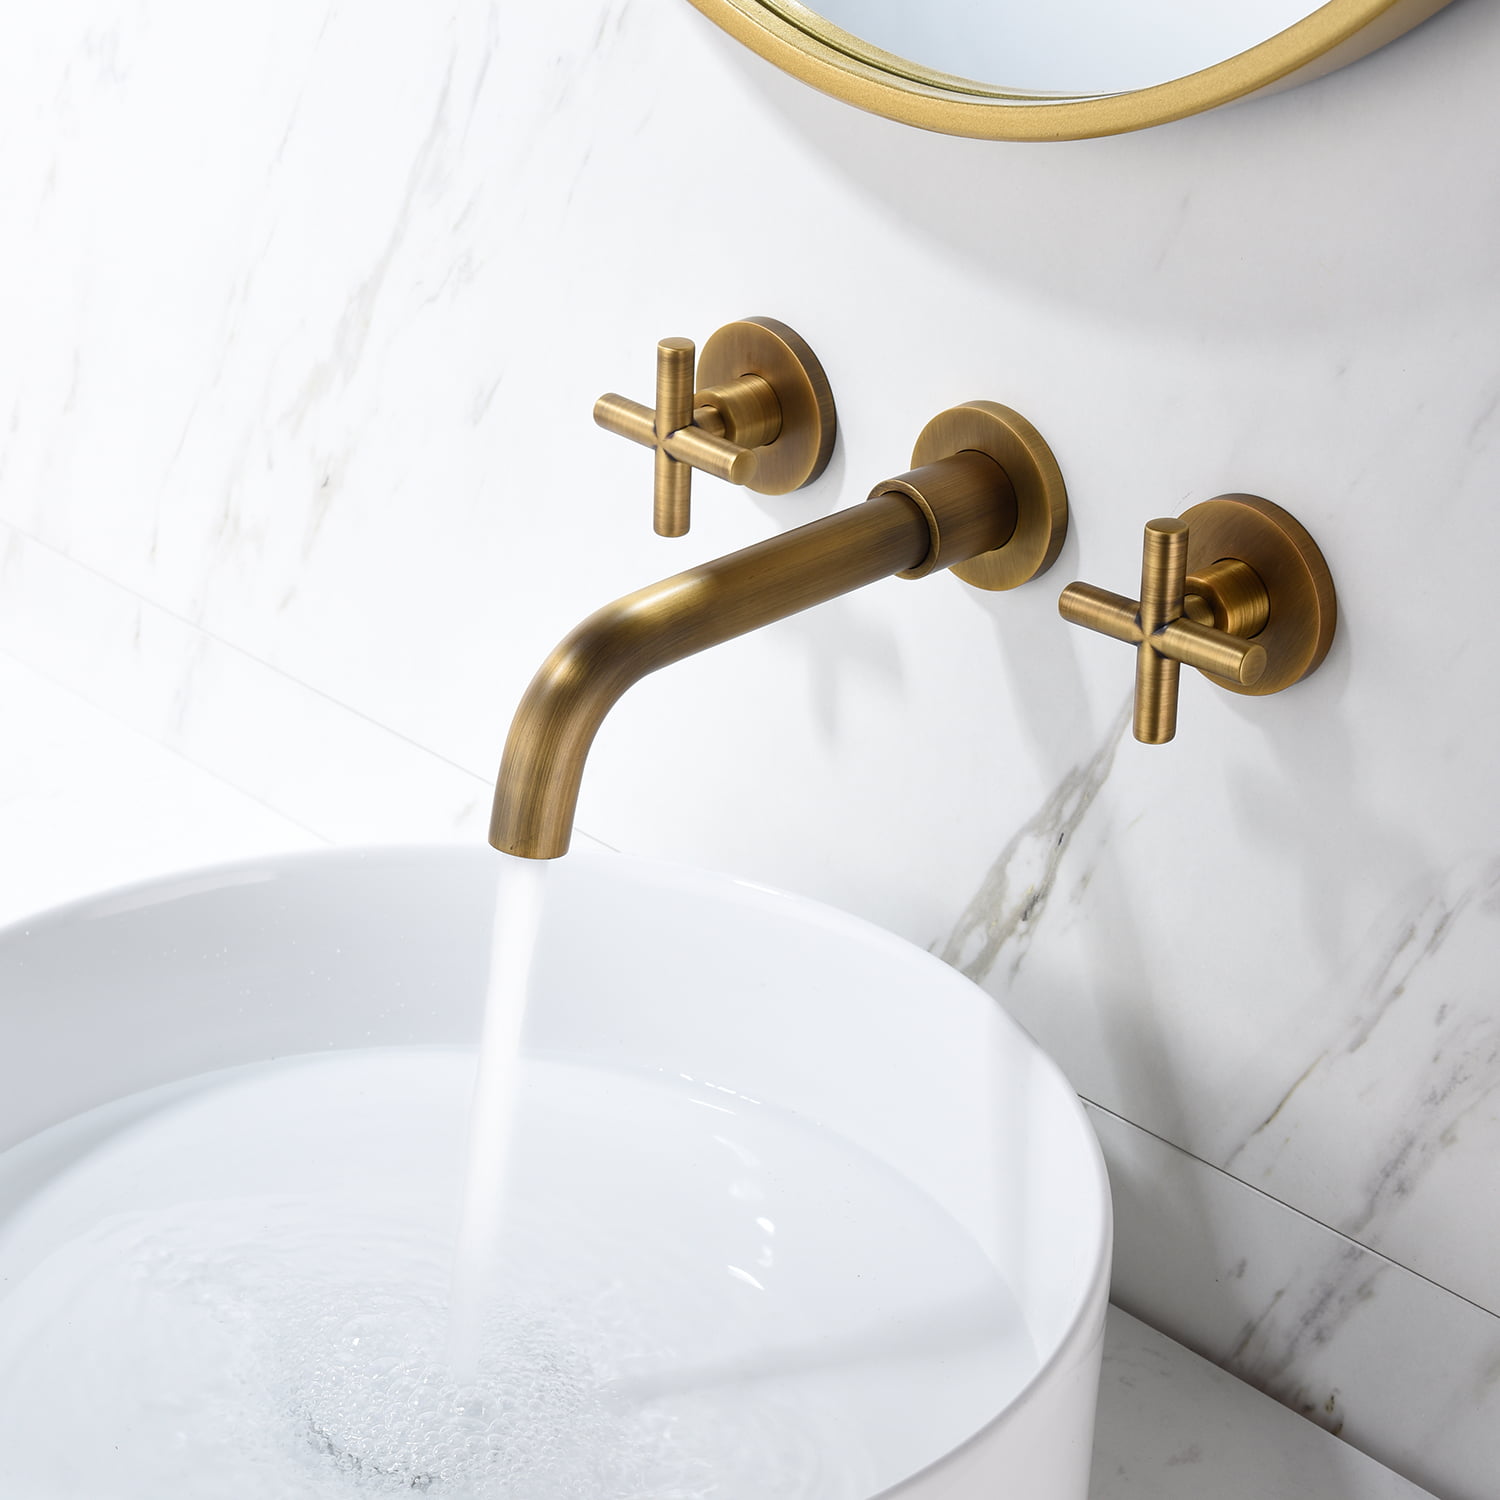 Widespread Brass Deck Mount Bathroom Faucet Basin Mixer Tap Dual Cross Handles 